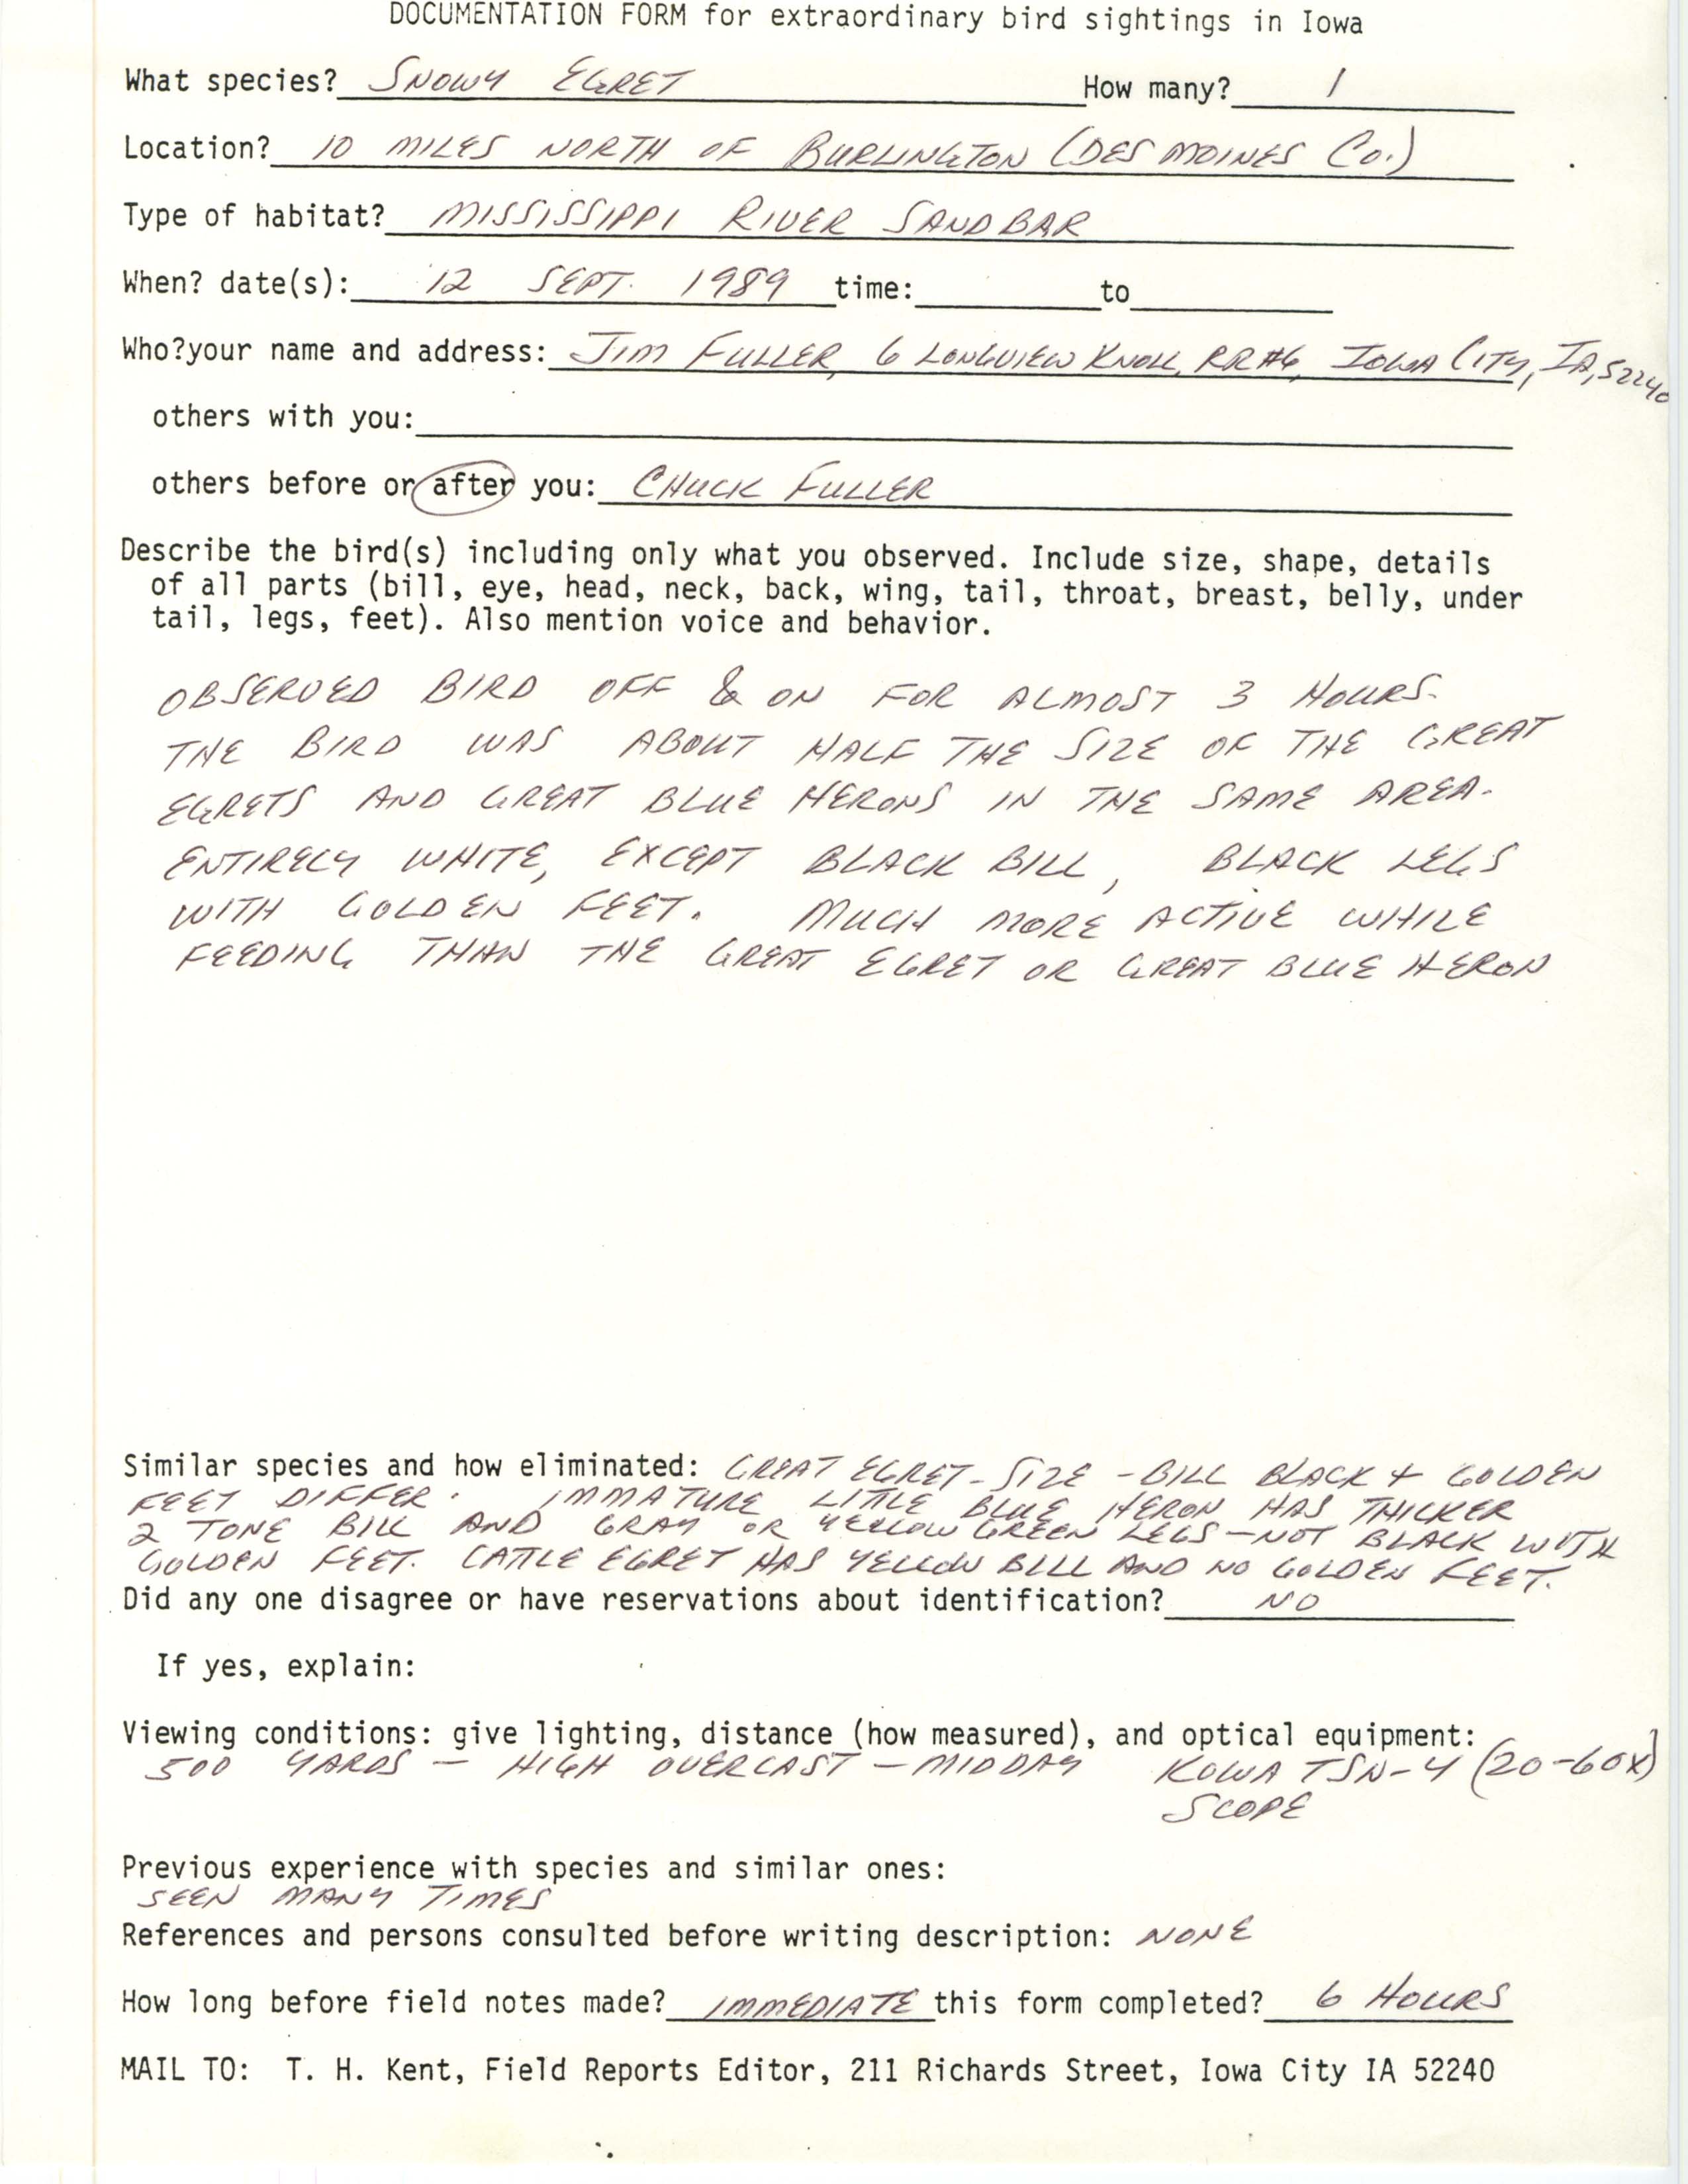 Rare bird documentation form for Snowy Egret ten miles north of Burlington, 1989